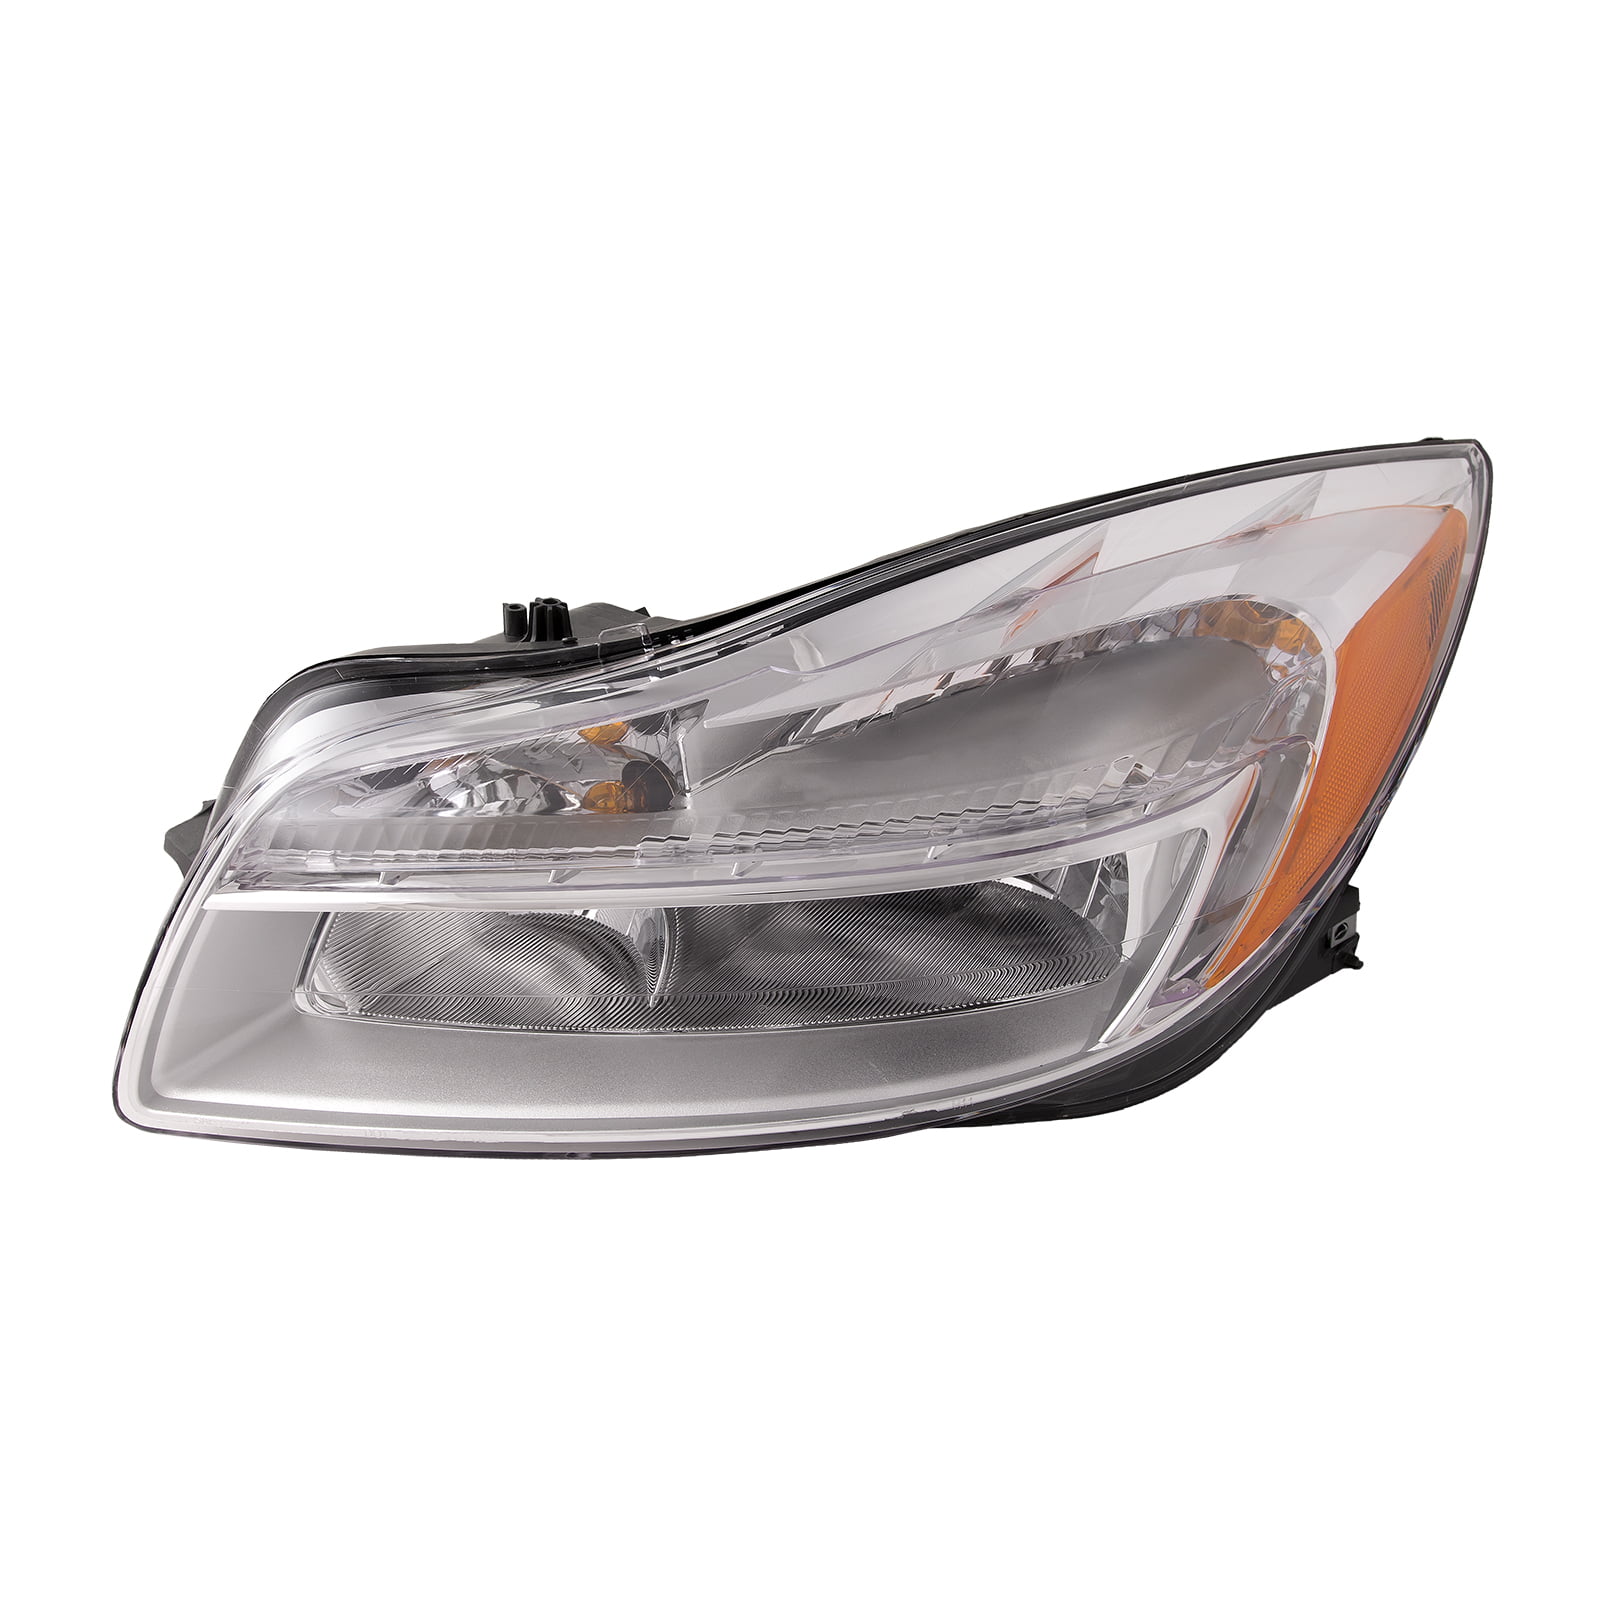 HEADLIGHTSDEPOT Chrome Housing Halogen Headlight Compatible with Ford Taurus 2000-2007 Includes Right Passenger Side Headlamp 